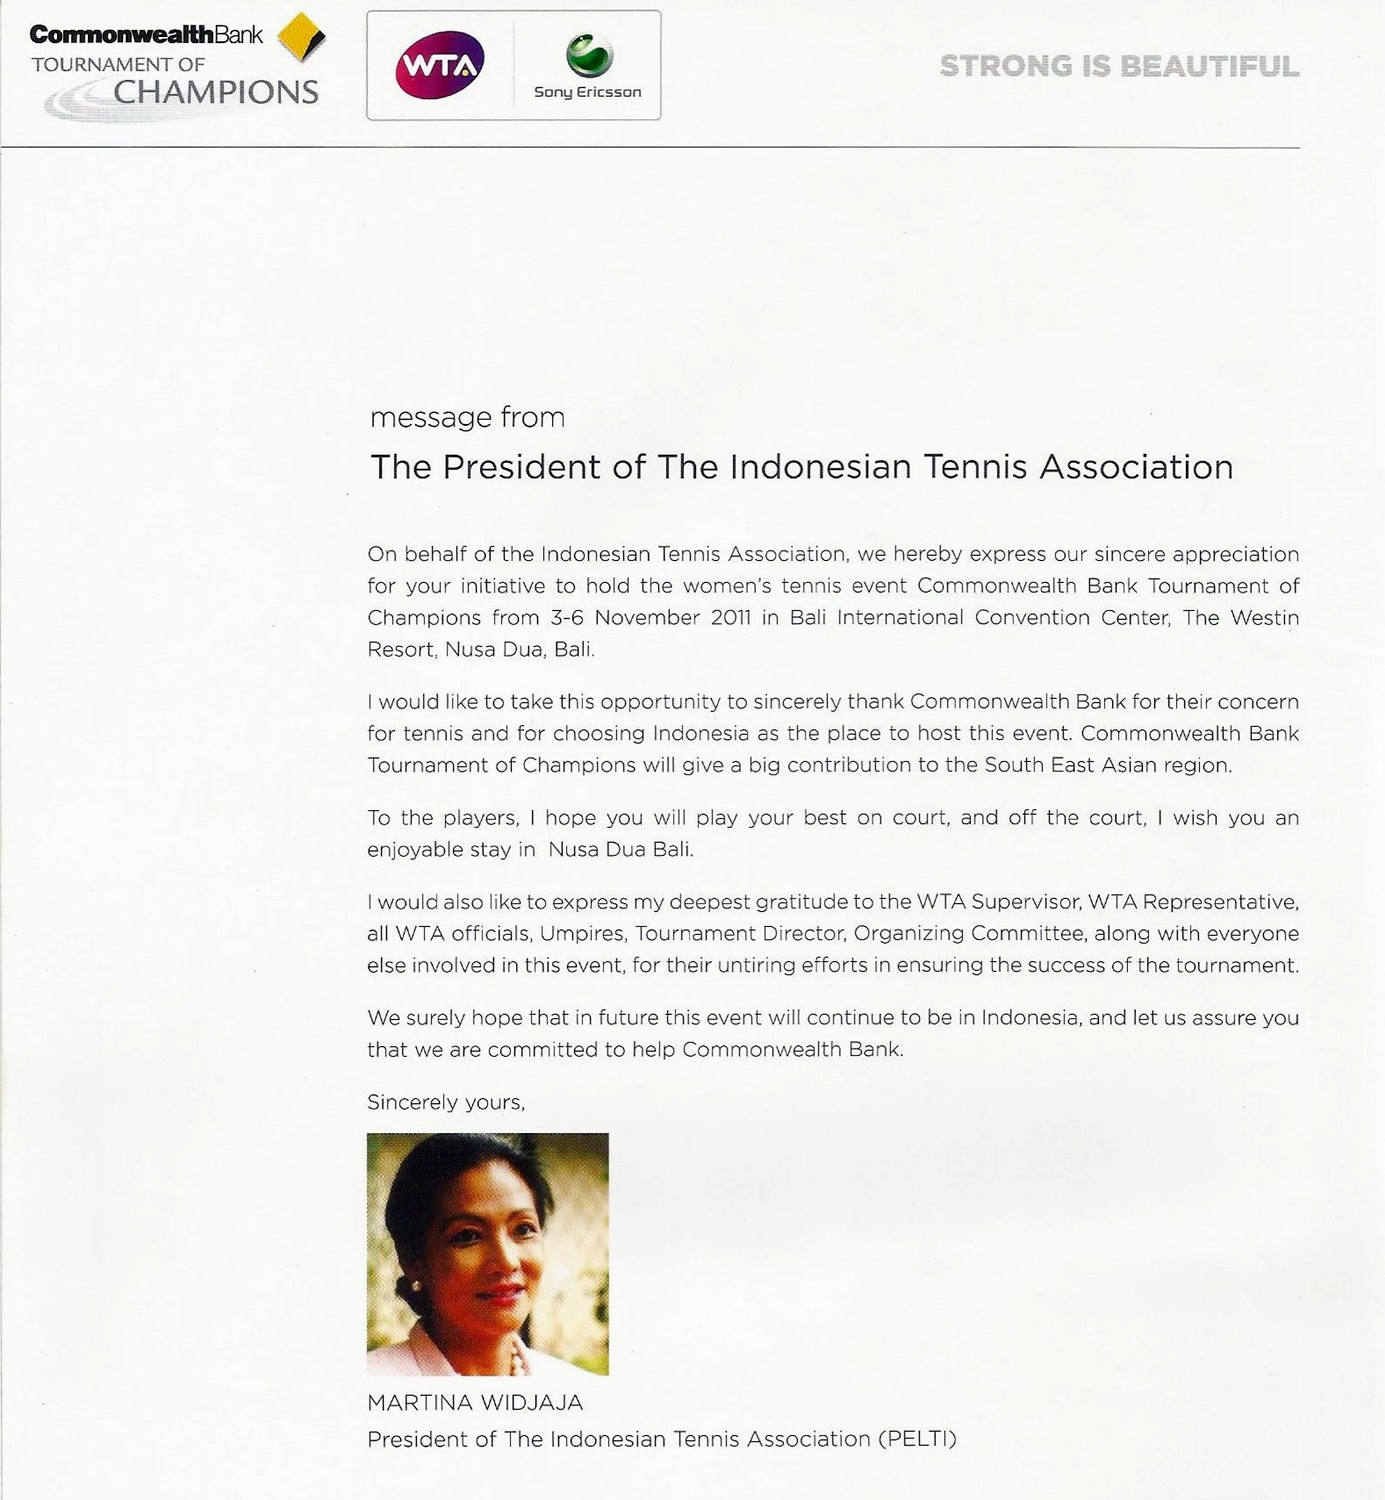 Message from Martina Widajaja - Presidentof the Indonesian Tennis Association